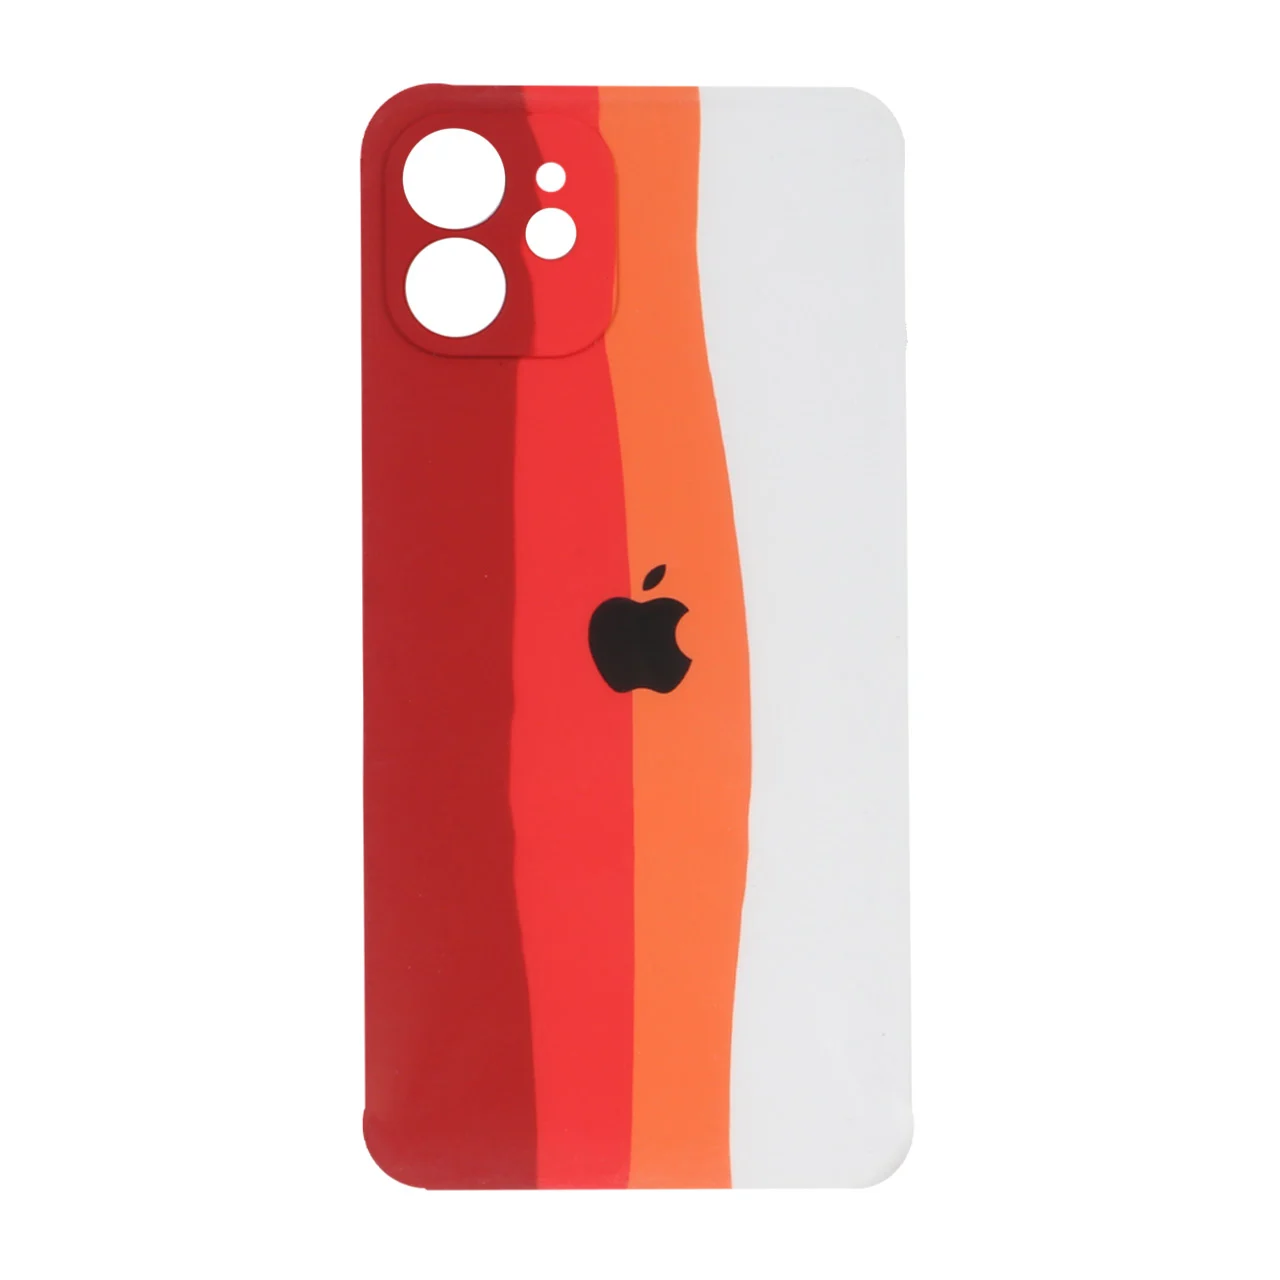 کاور سیلیکونی آبرنگی مناسب گوشی موبایل آیفون 12 – نارنجی